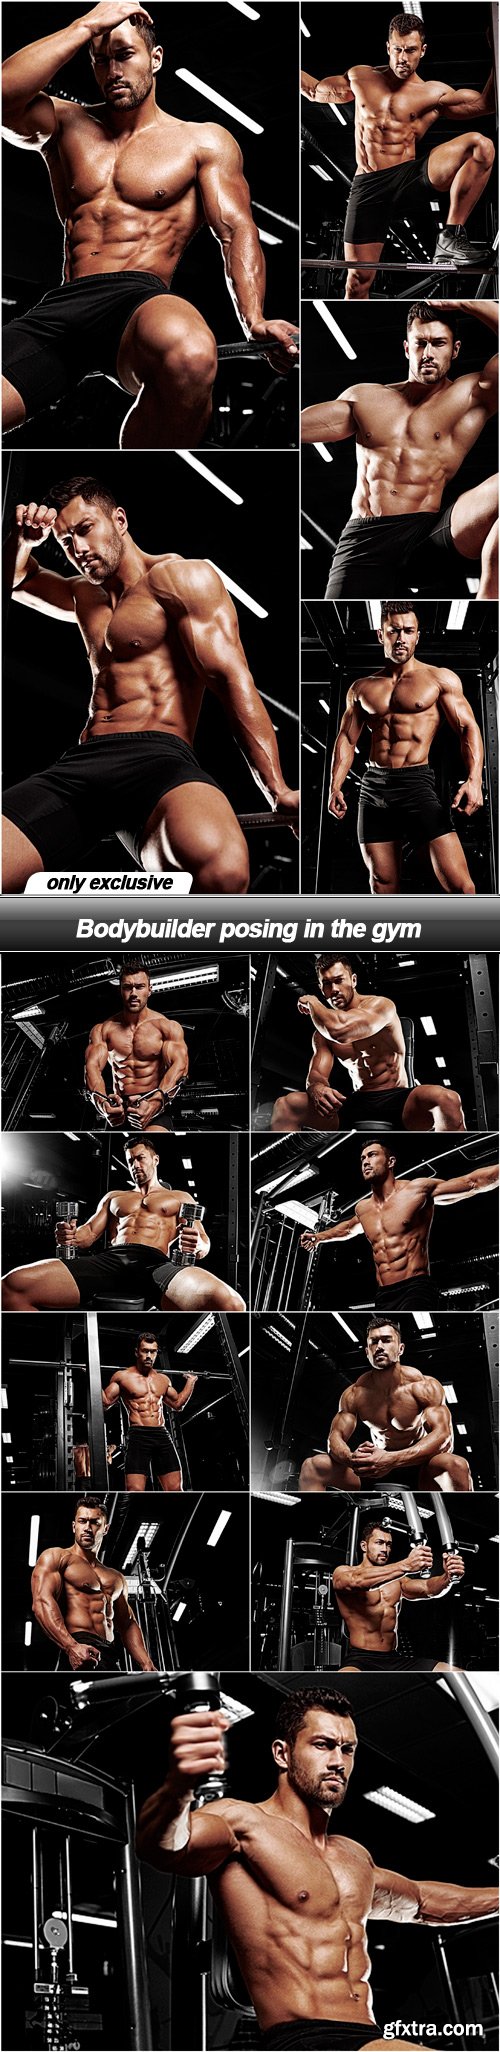 Bodybuilder posing in the gym - 14 UHQ JPEG